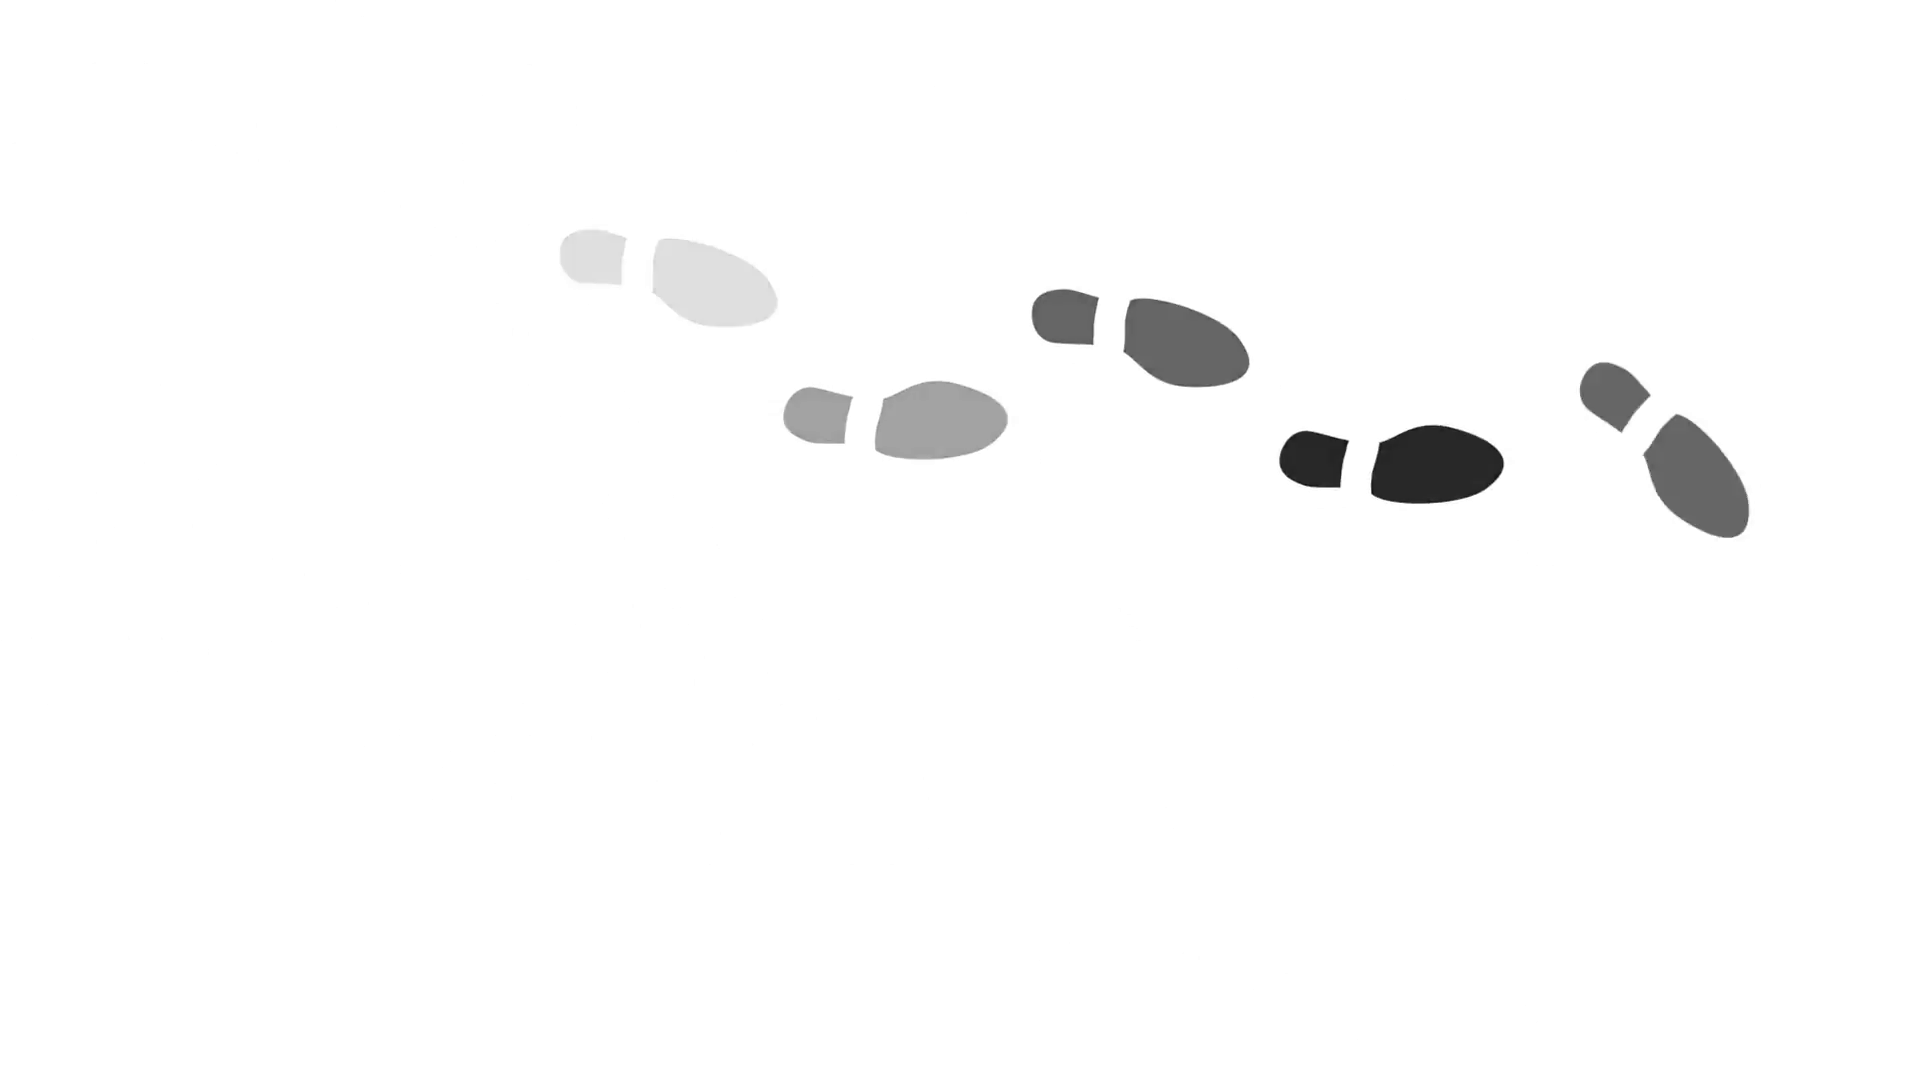 footprints - Ideal.vistalist.co